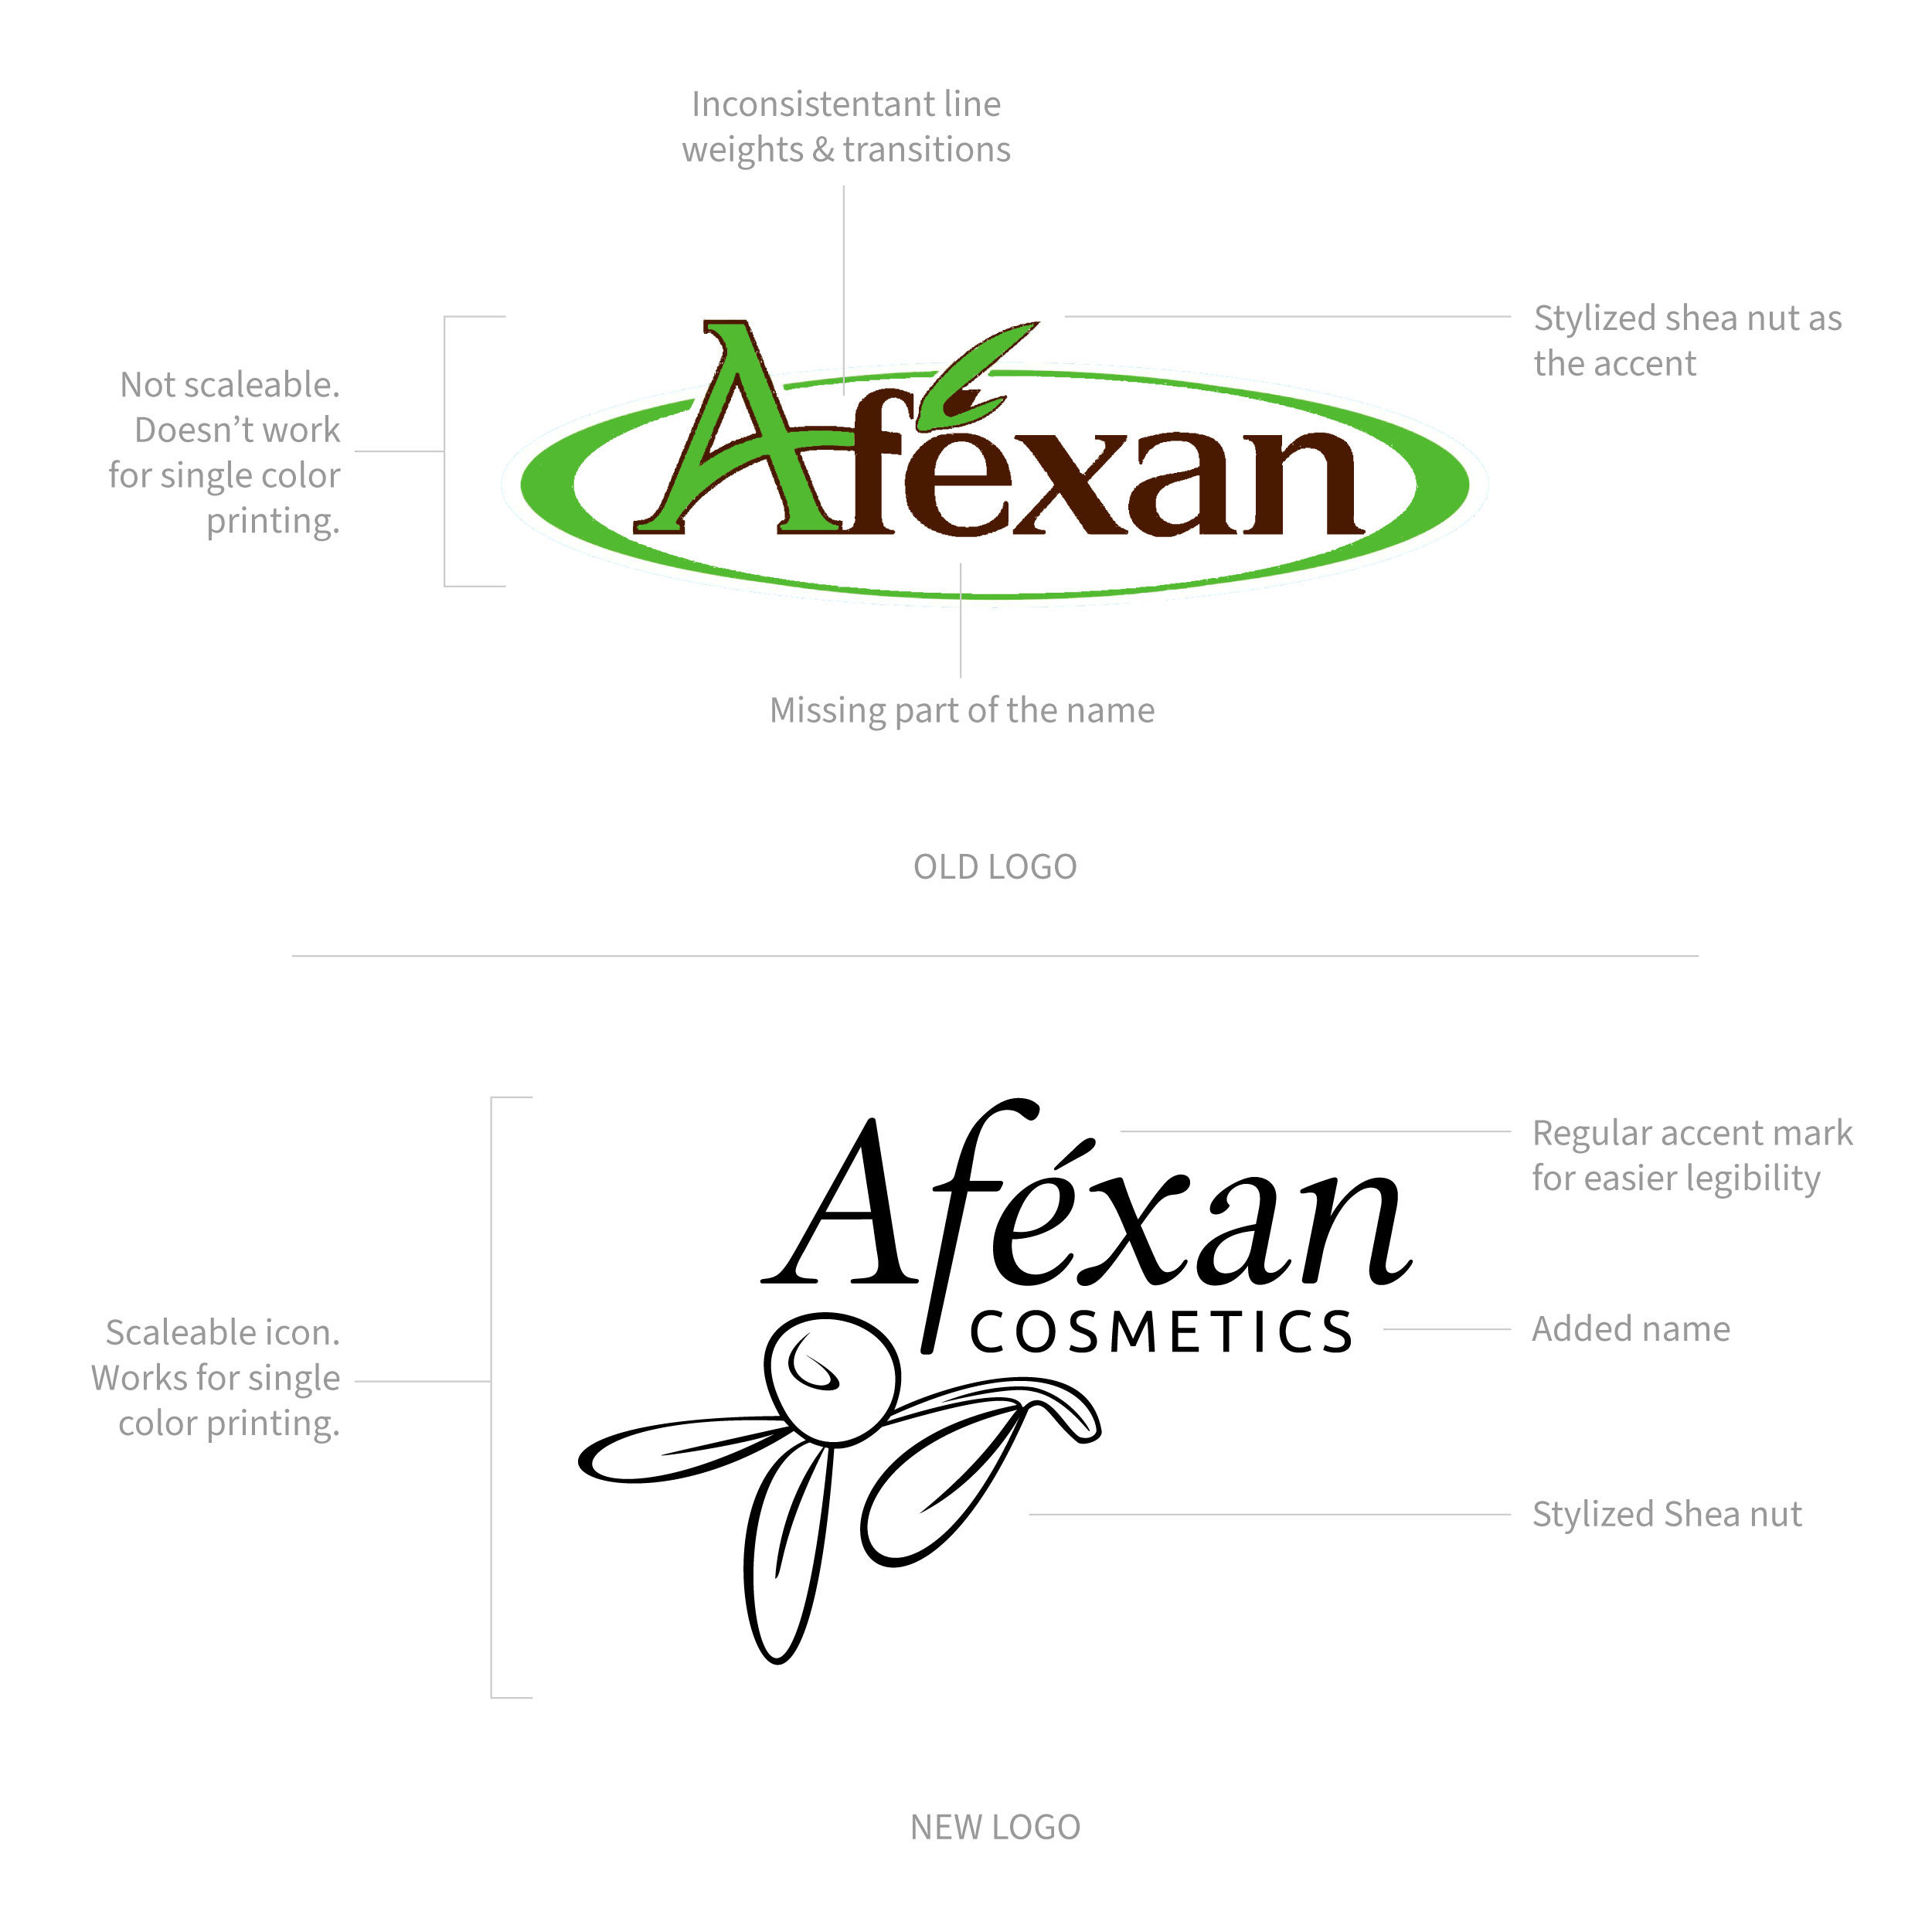 Afexan Cosmetics logo comparison